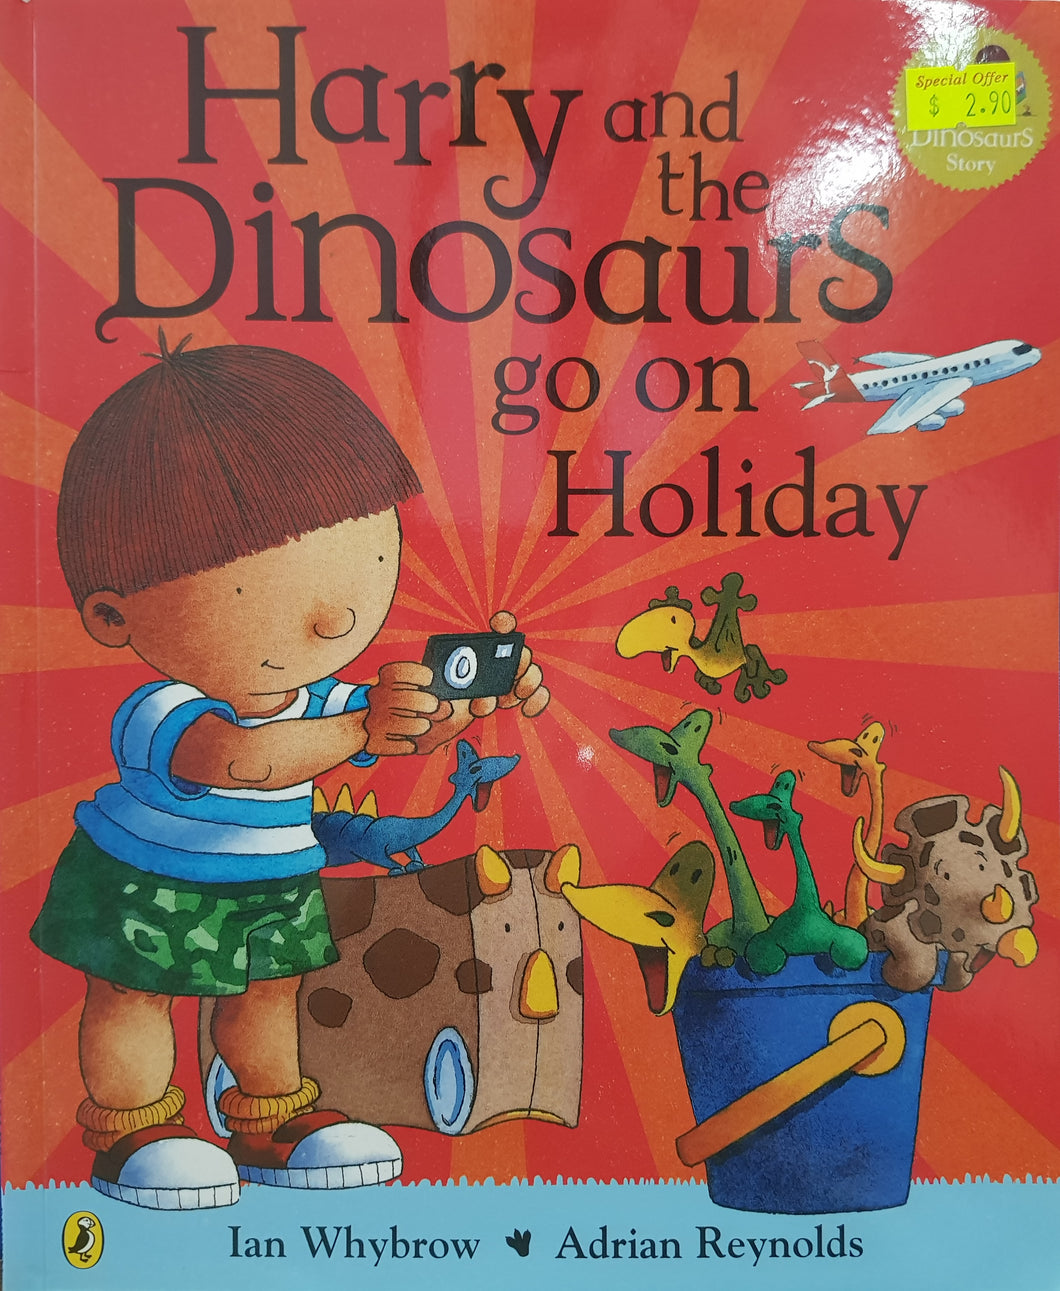 Harry and the Bucketful of Dinosaurs go on Holiday - Ian Whybrow & Adrian Reynolds